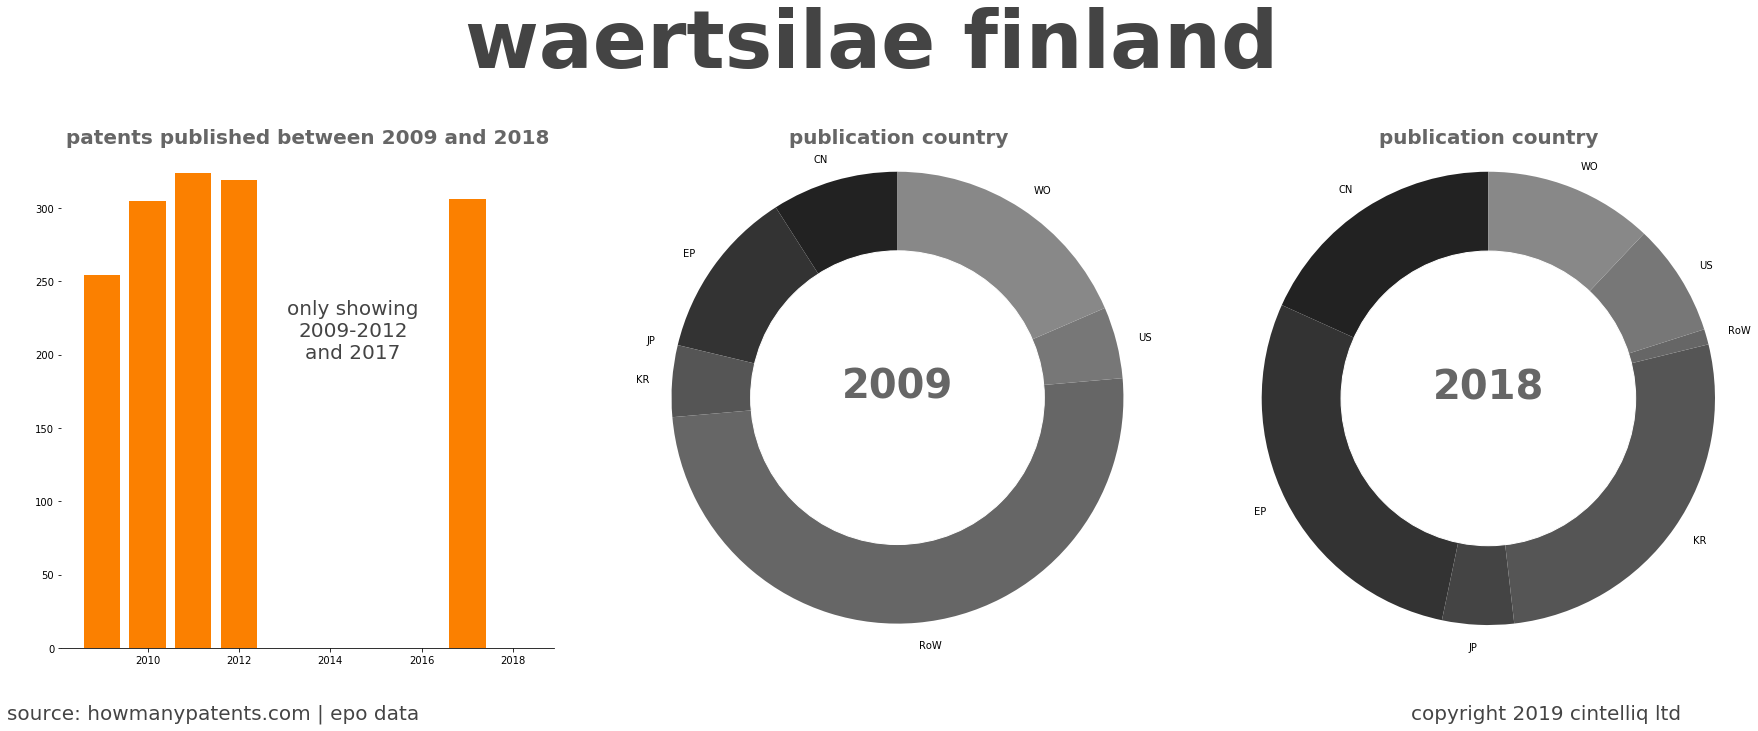 summary of patents for Waertsilae Finland